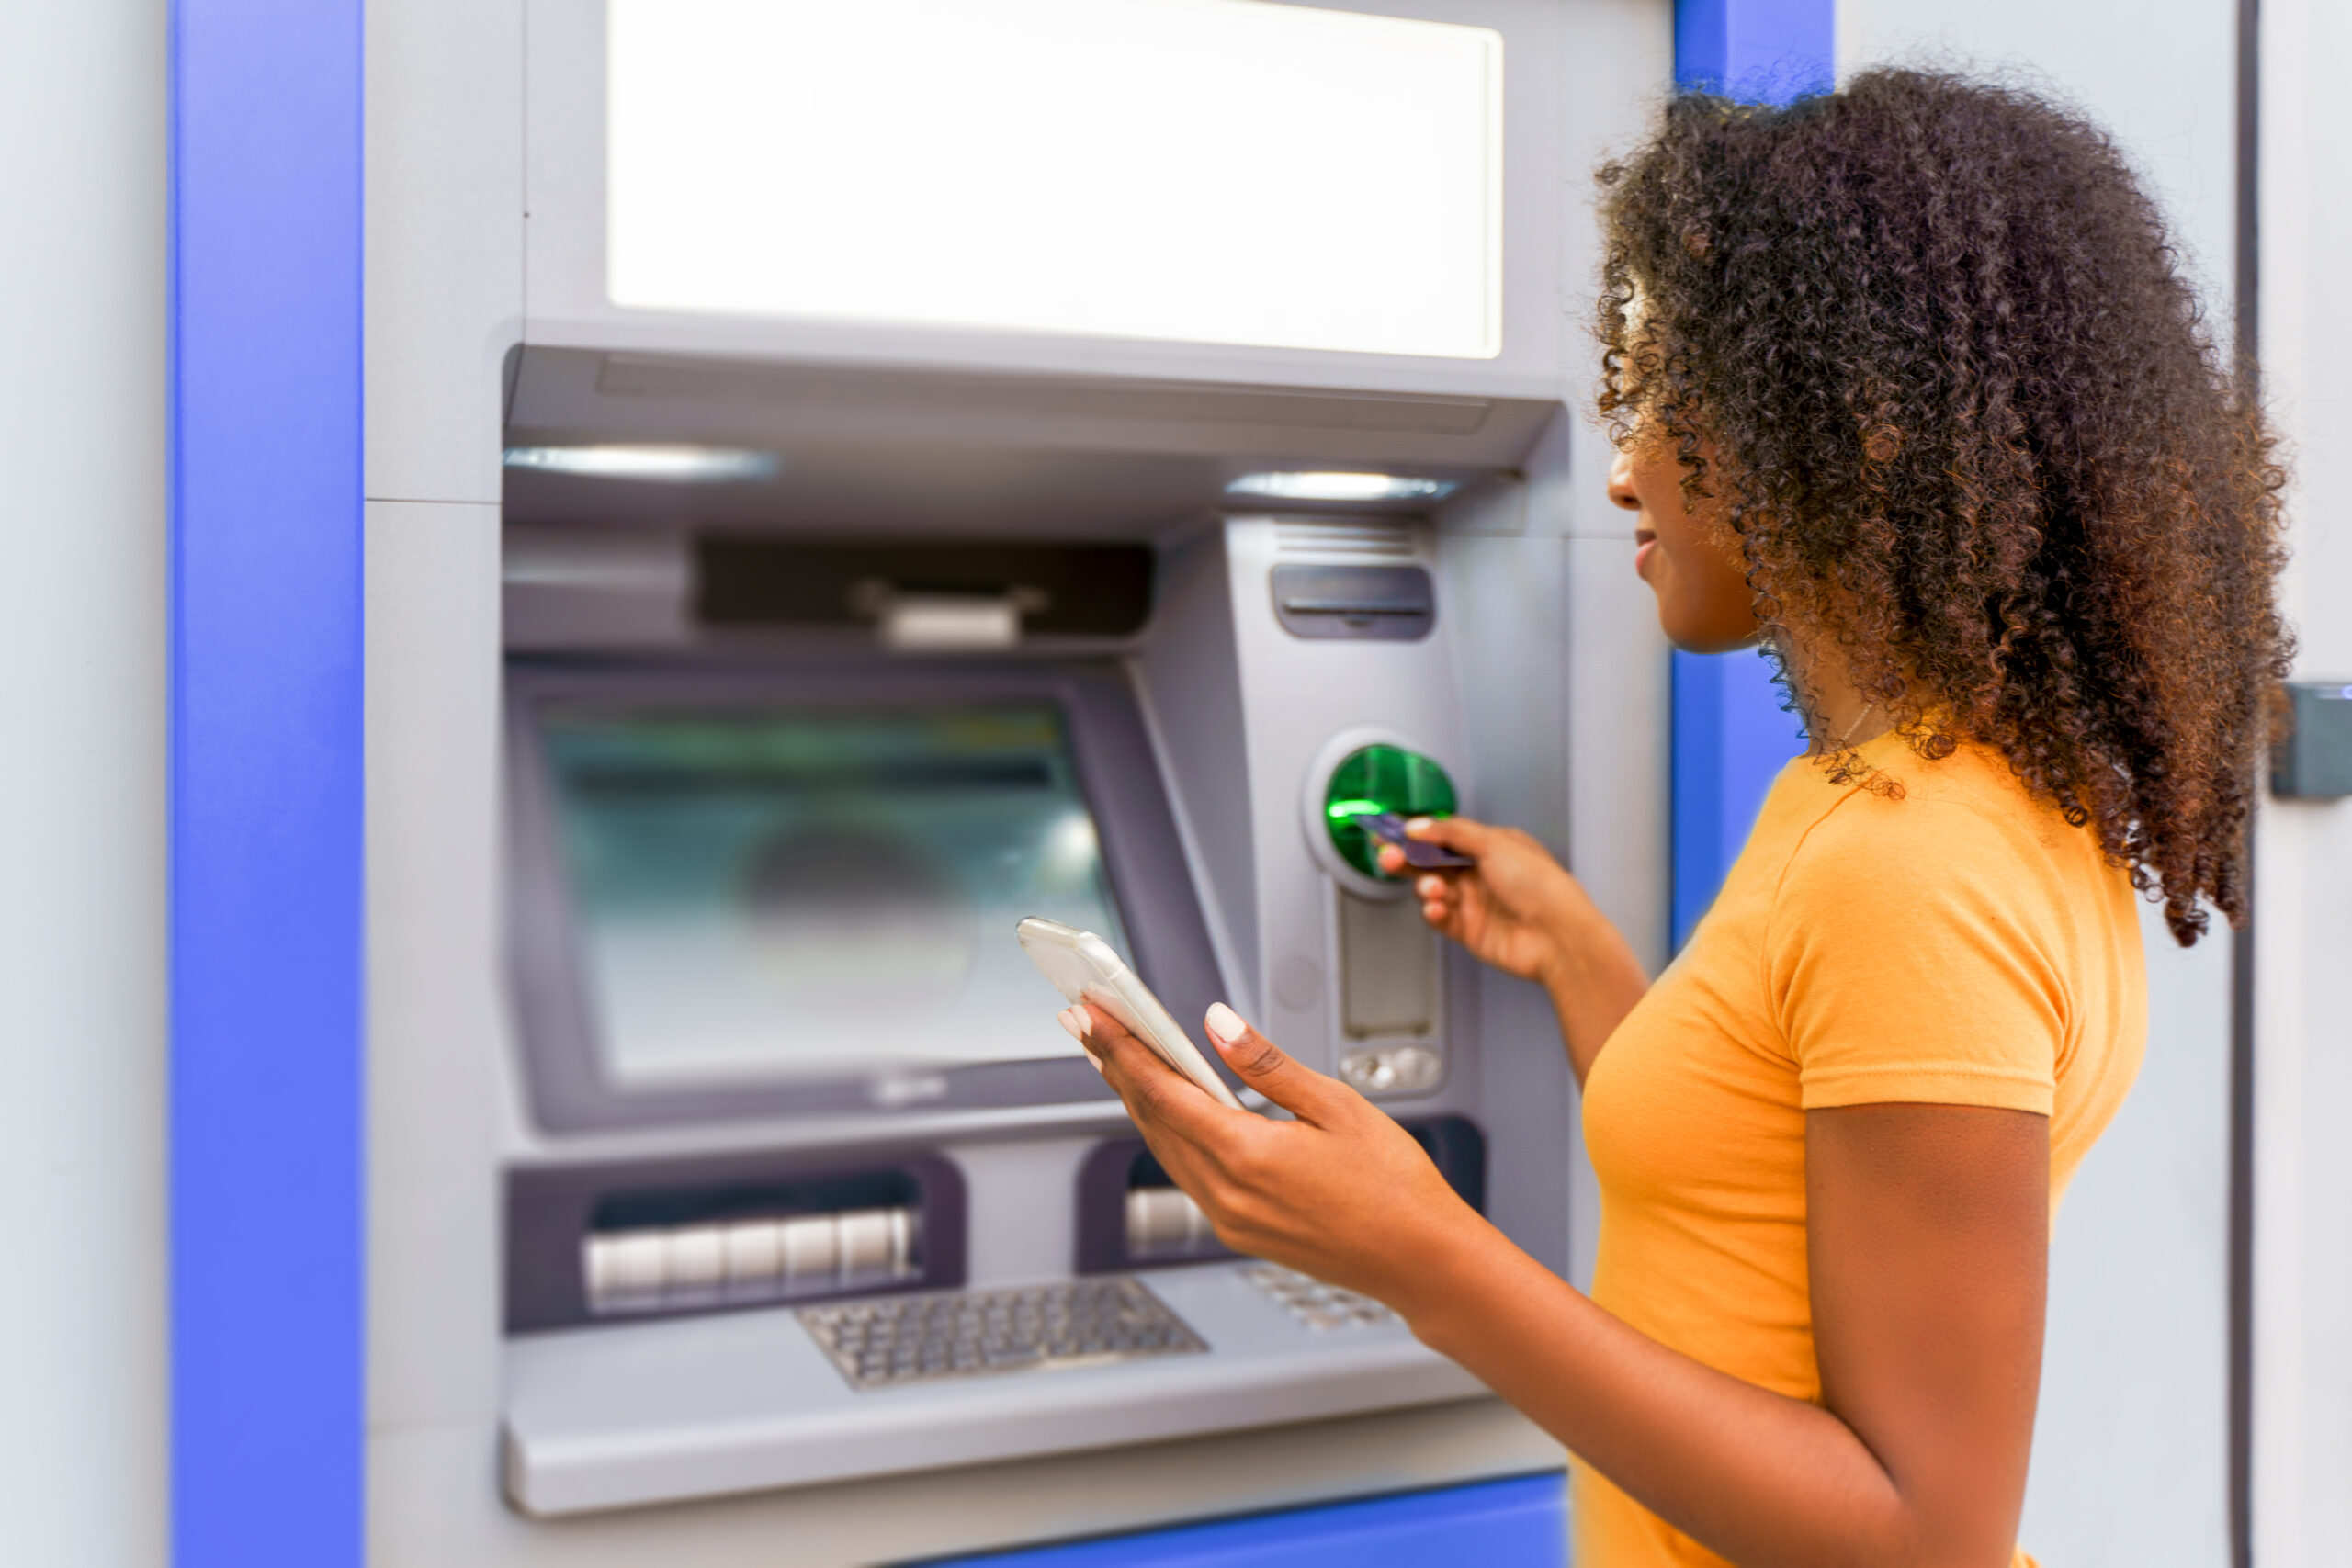 using debit card at ATM